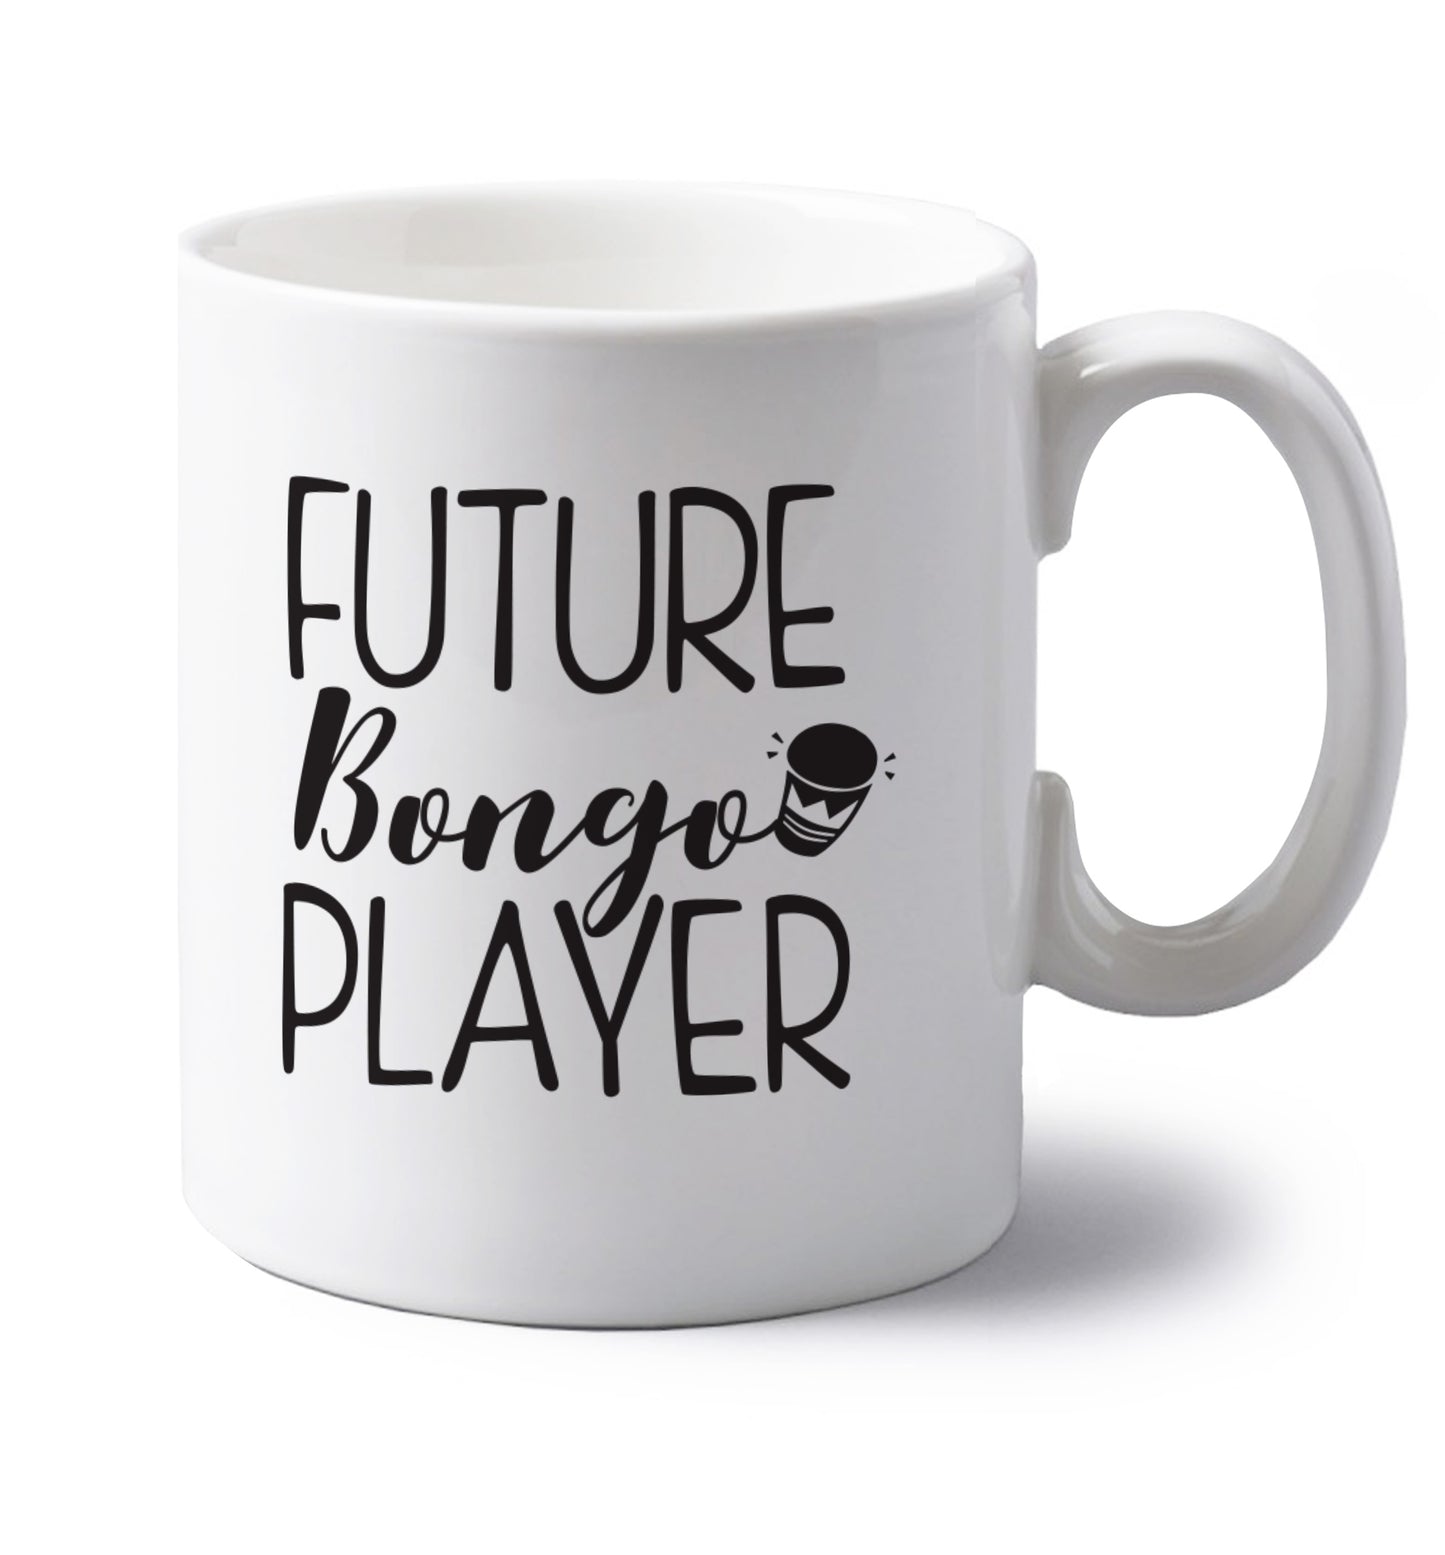 Future bongo player left handed white ceramic mug 